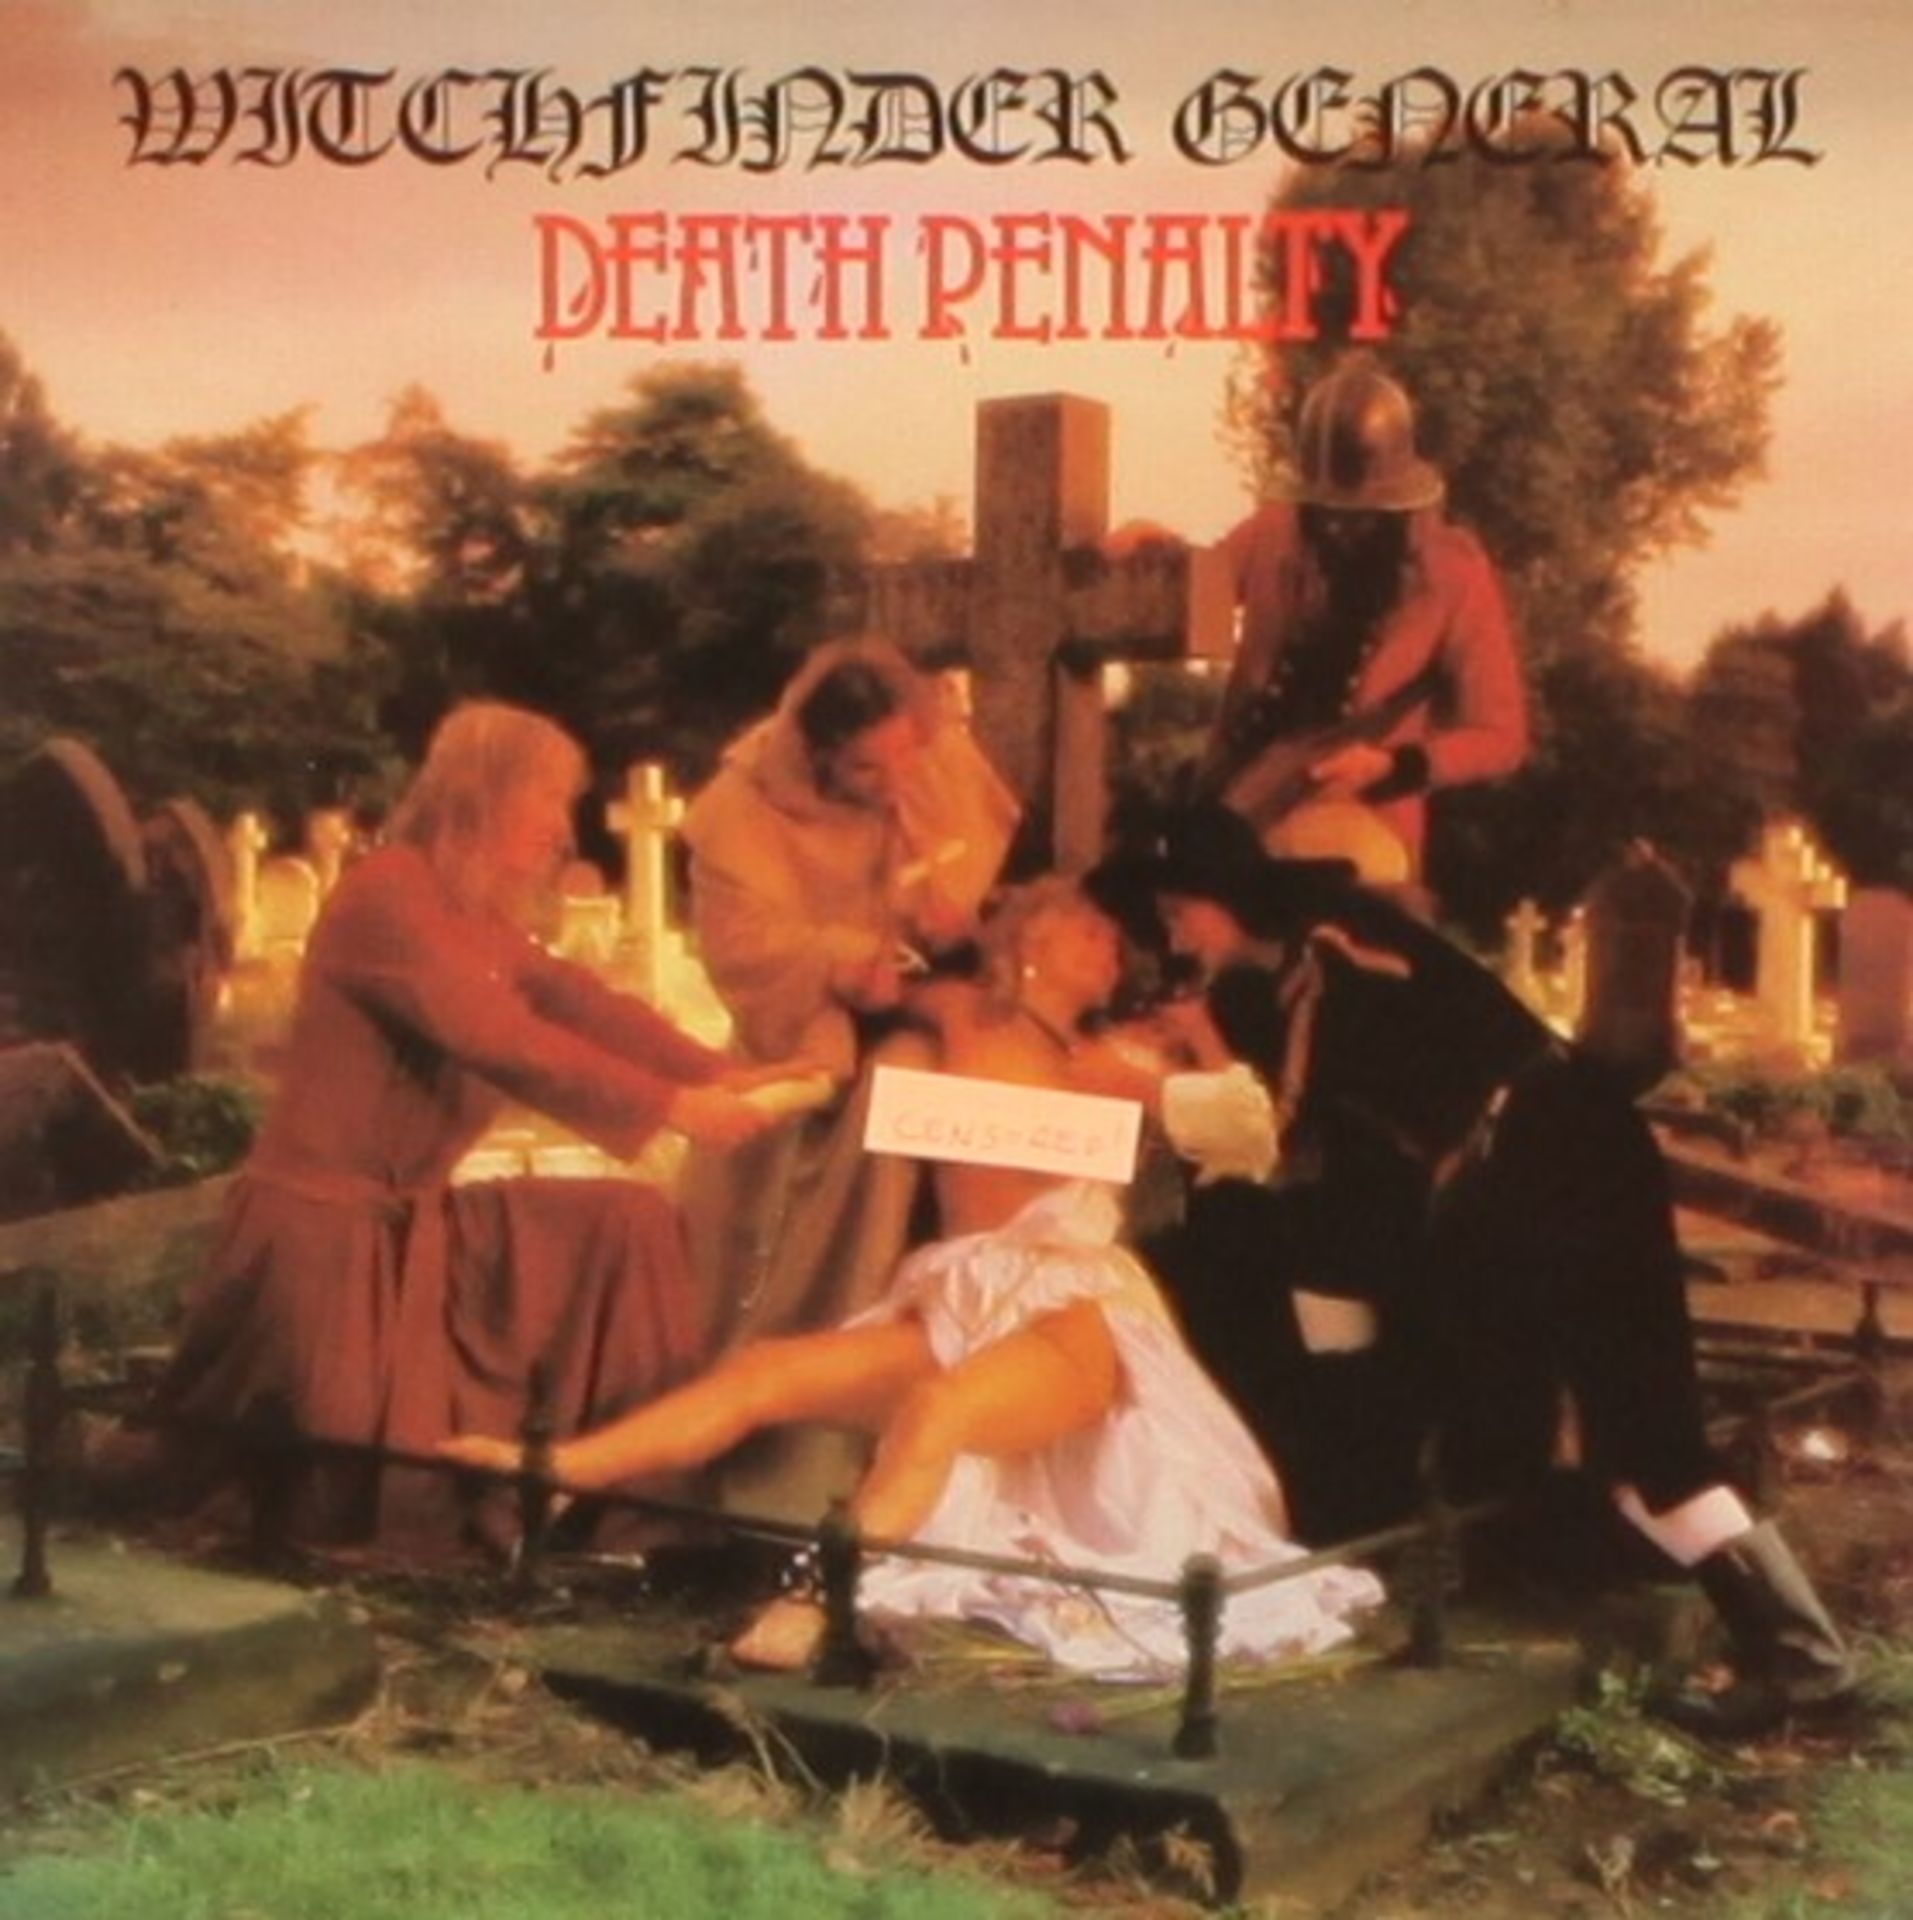 Witchfinder General - Death Penalty LP